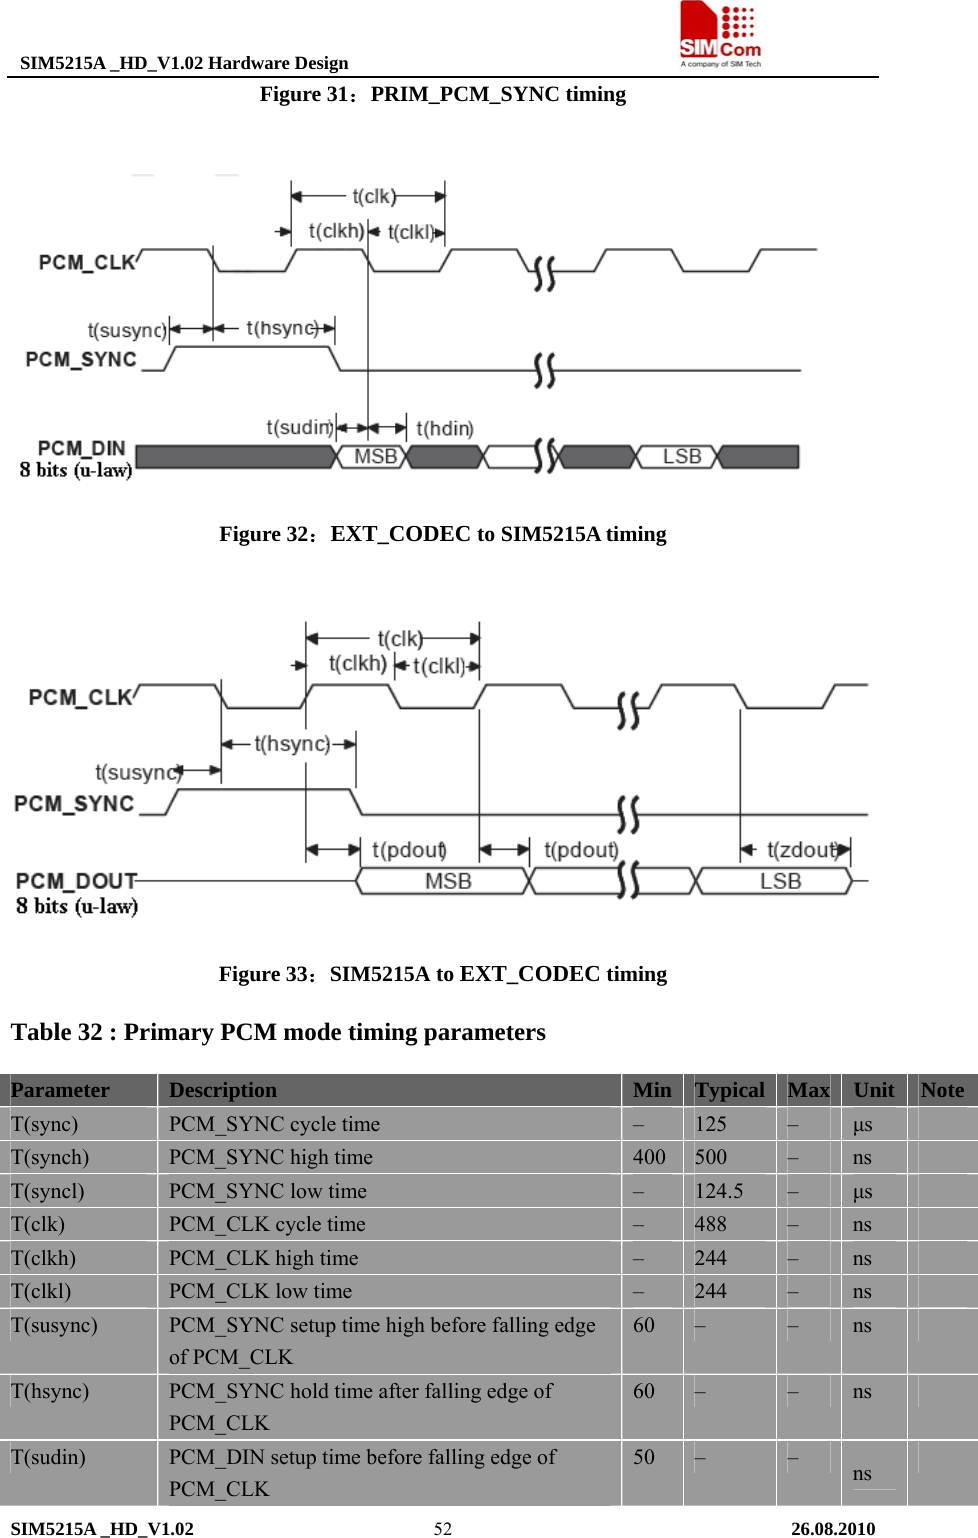  SIM5215A _HD_V1.02 Hardware Design                                     SIM5215A _HD_V1.02   26.08.2010   52Figure 31：PRIM_PCM_SYNC timing   Figure 32：EXT_CODEC to SIM5215A timing   Figure 33：SIM5215A to EXT_CODEC timing Table 32 : Primary PCM mode timing parameters Parameter   Description   Min  Typical  Max  Unit  Note T(sync)  PCM_SYNC cycle time  –  125  –  μs    T(synch)  PCM_SYNC high time  400 500  –  ns    T(syncl)  PCM_SYNC low time  –  124.5  –  μs    T(clk)   PCM_CLK cycle time  –  488  –  ns    T(clkh)  PCM_CLK high time  –  244  –  ns    T(clkl)  PCM_CLK low time  –  244  –  ns    T(susync)  PCM_SYNC setup time high before falling edge of PCM_CLK 60  –  –  ns     T(hsync)  PCM_SYNC hold time after falling edge of PCM_CLK 60  –  –  ns    T(sudin)   PCM_DIN setup time before falling edge of PCM_CLK 50  –  –  ns    